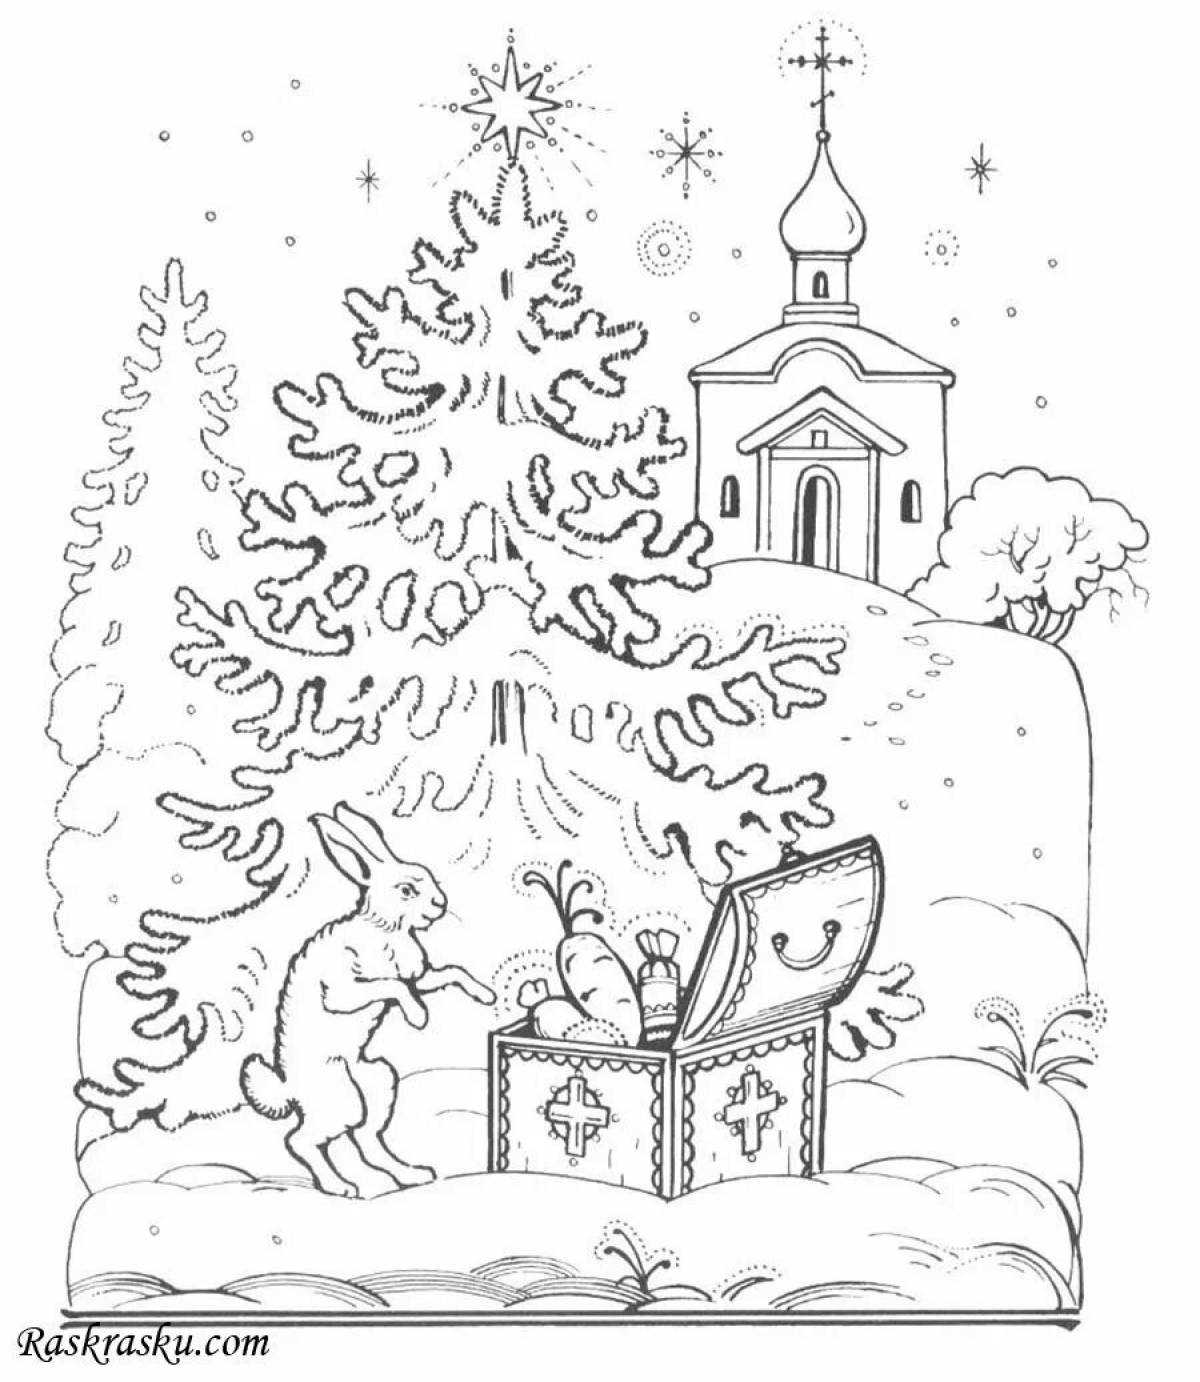 Nostalgic Christmas story coloring page